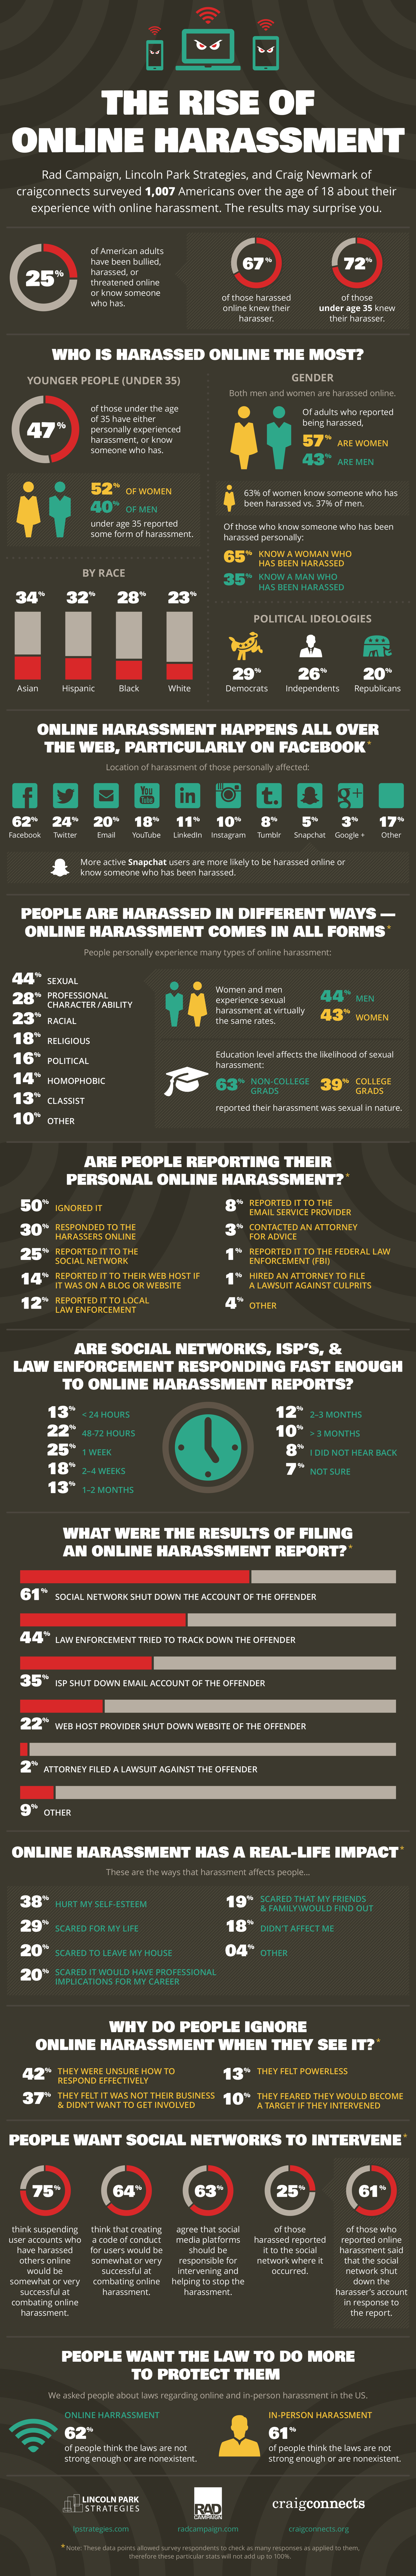 Online Harassment 2014 